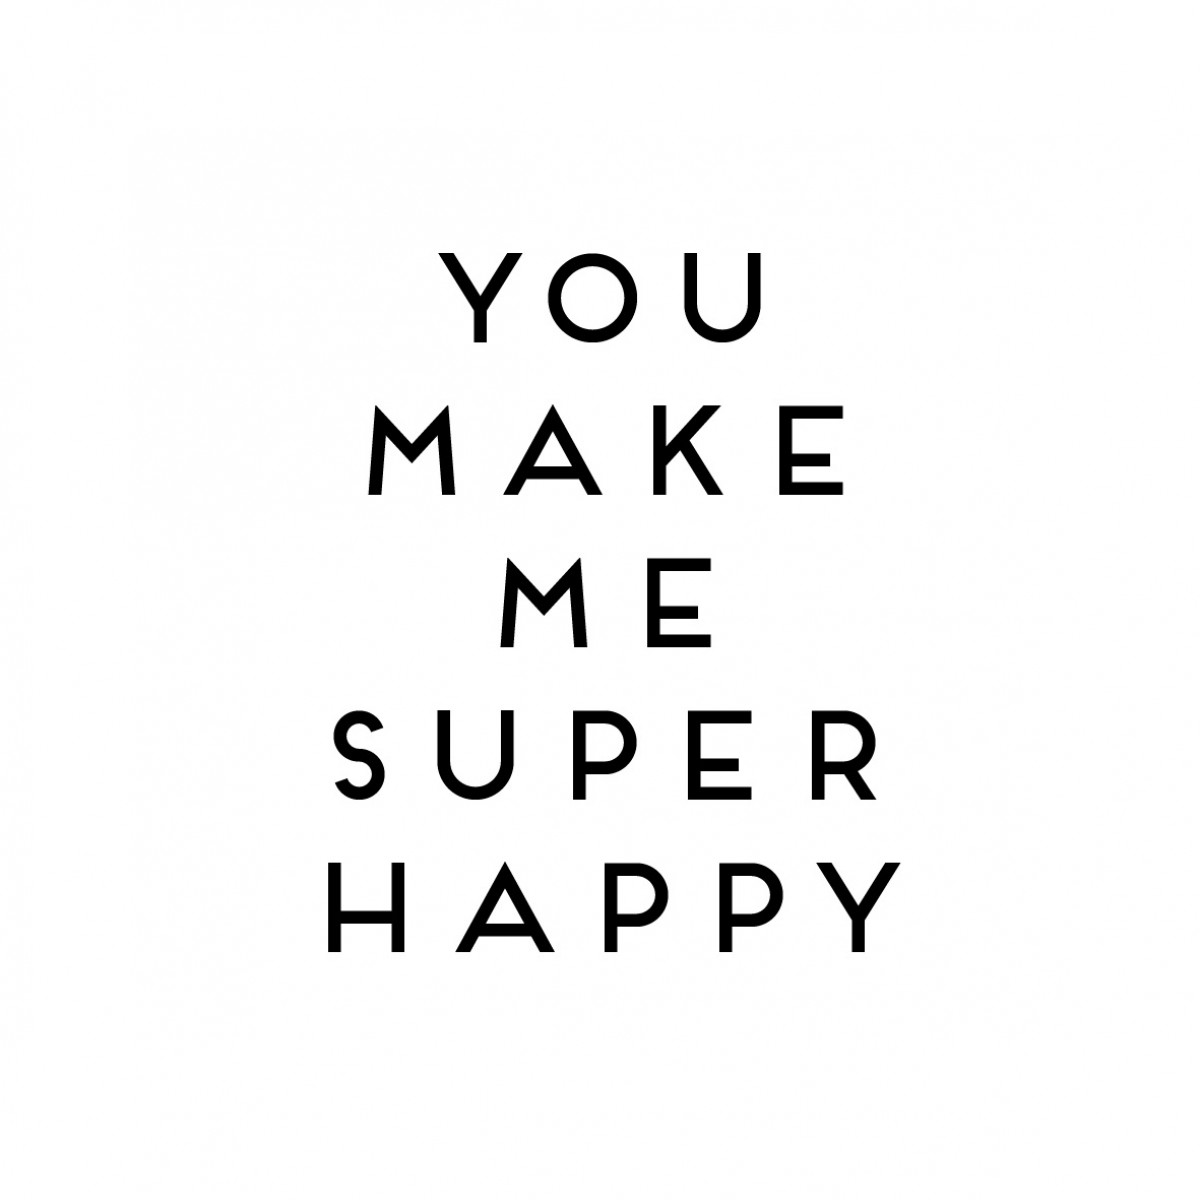 Love is the new black - Motiv "You make me super happy" gerahmt, 19x19 cm